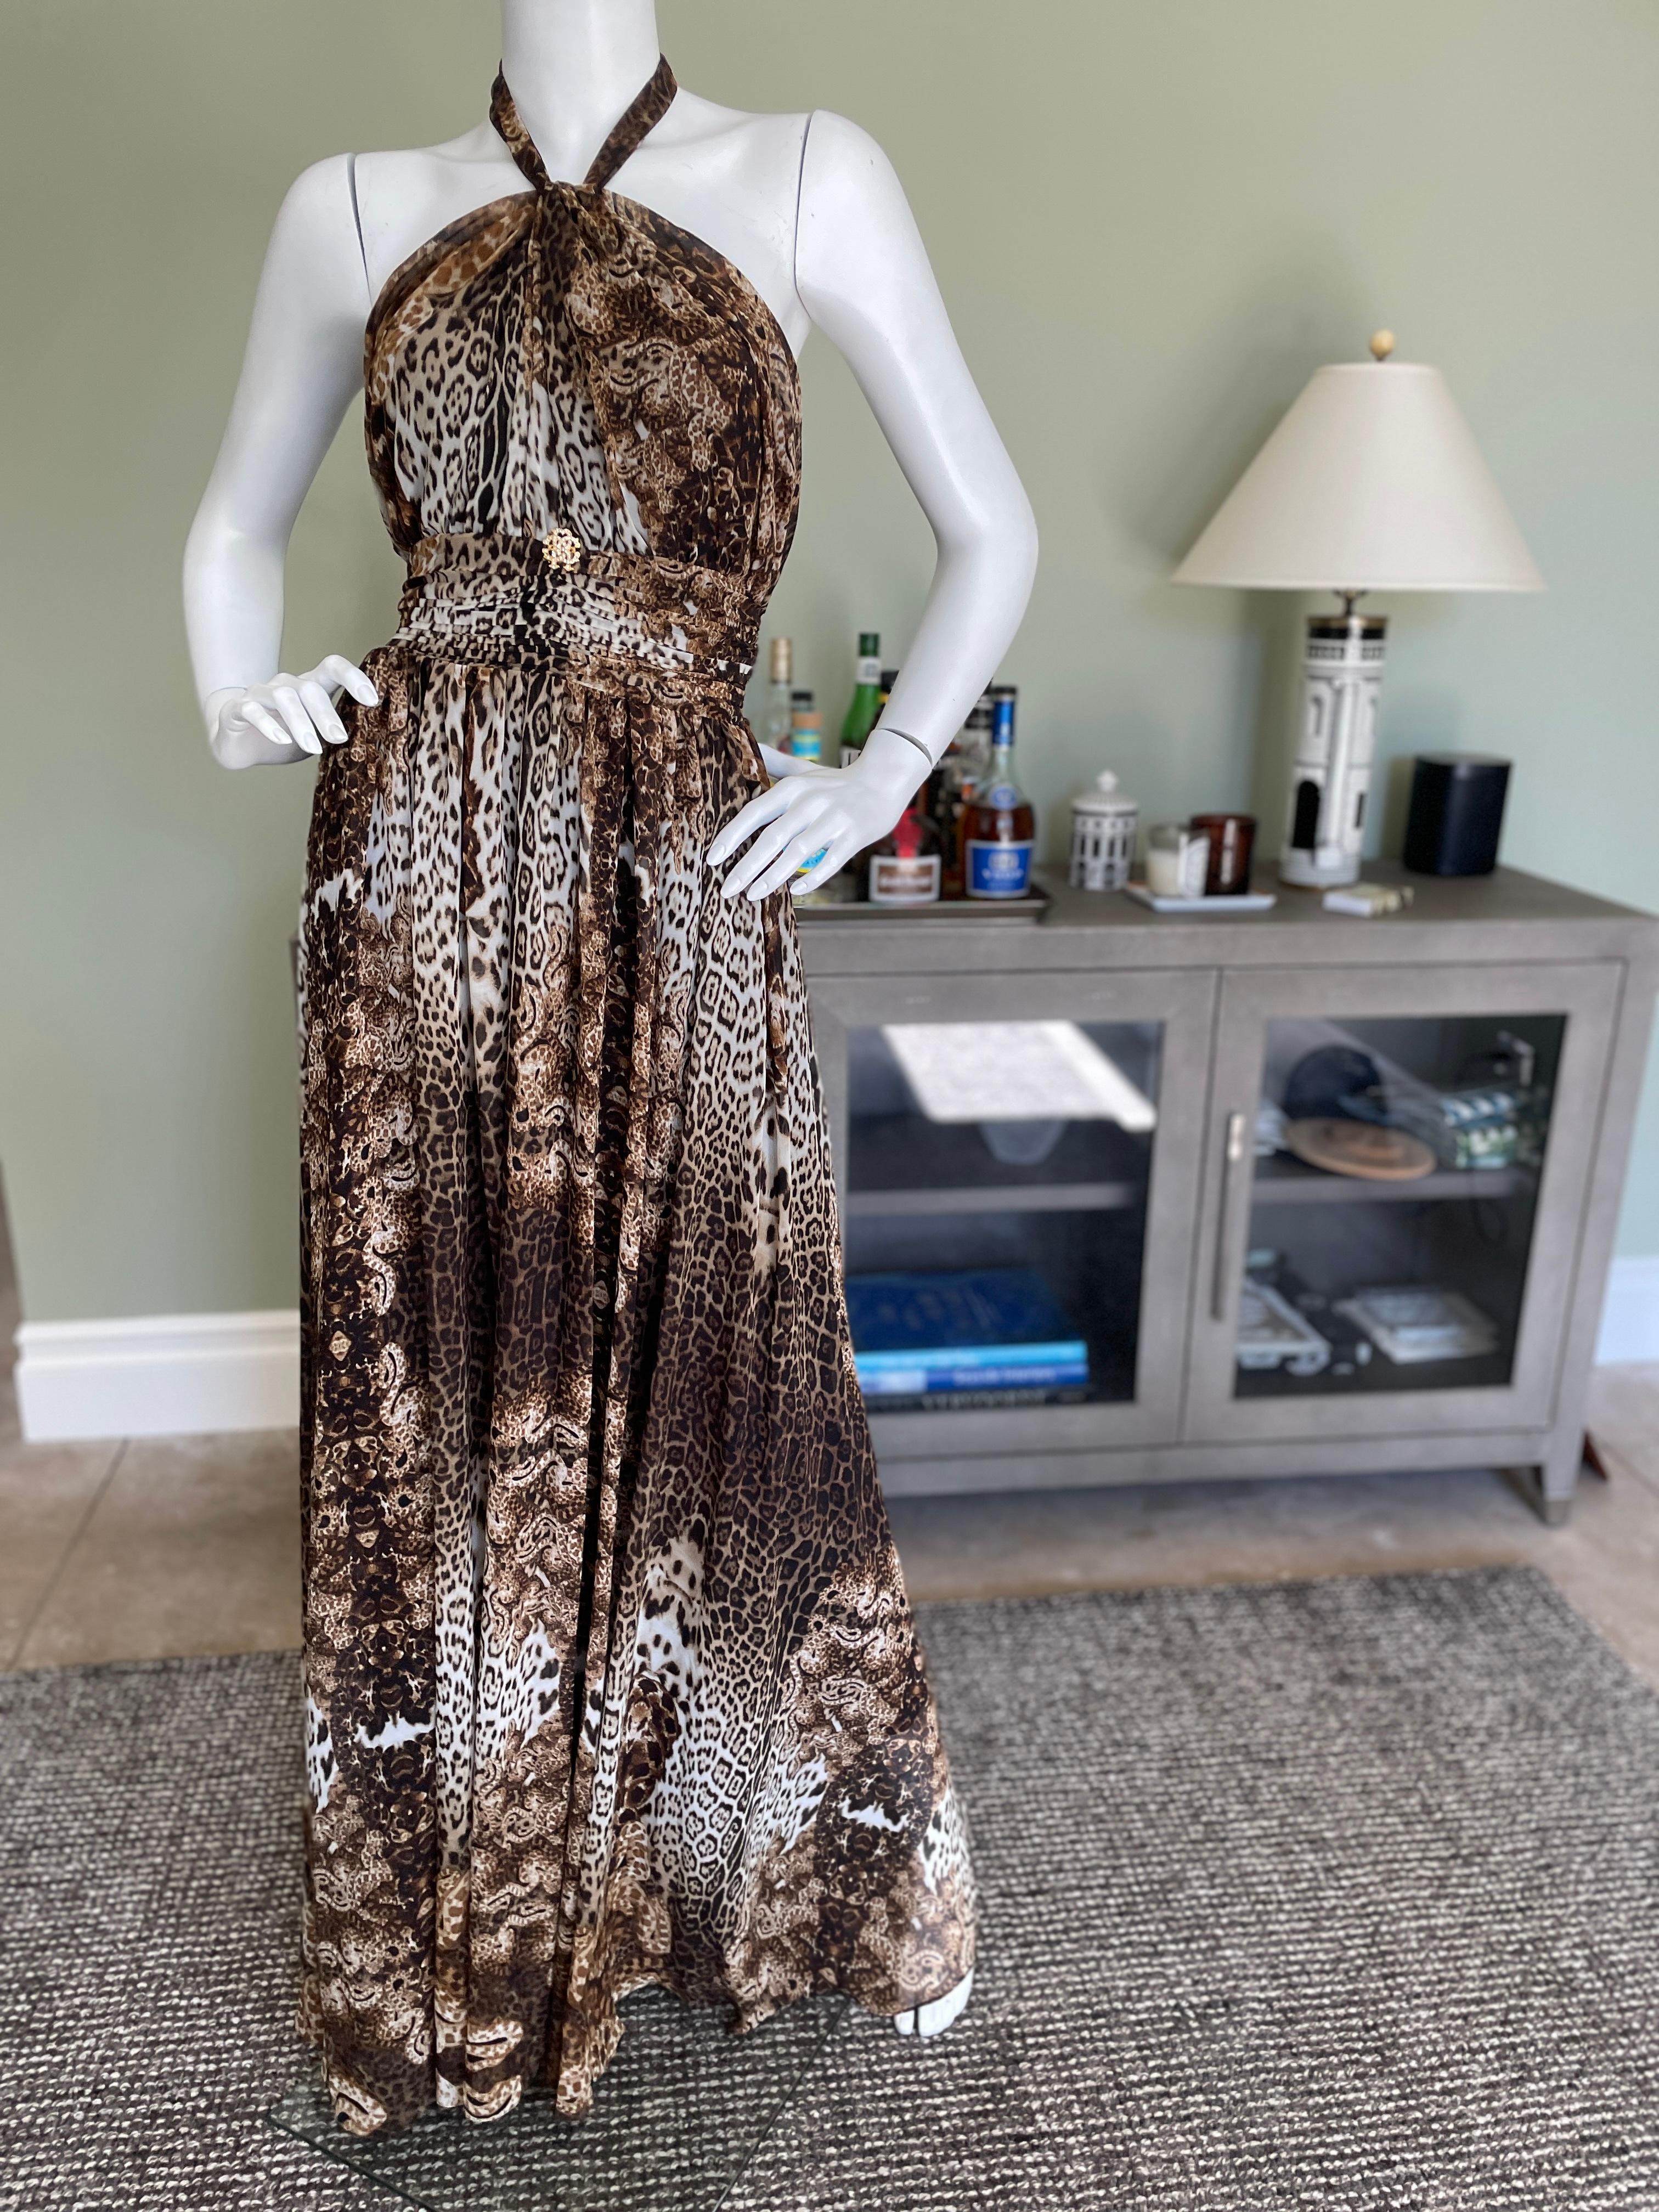 Roberto Cavalli Vintage Tie Neck Halter Style Leopard Print Evening Dress with Voluminous Skirt
Simply sensational
 Size M
 Bust 35